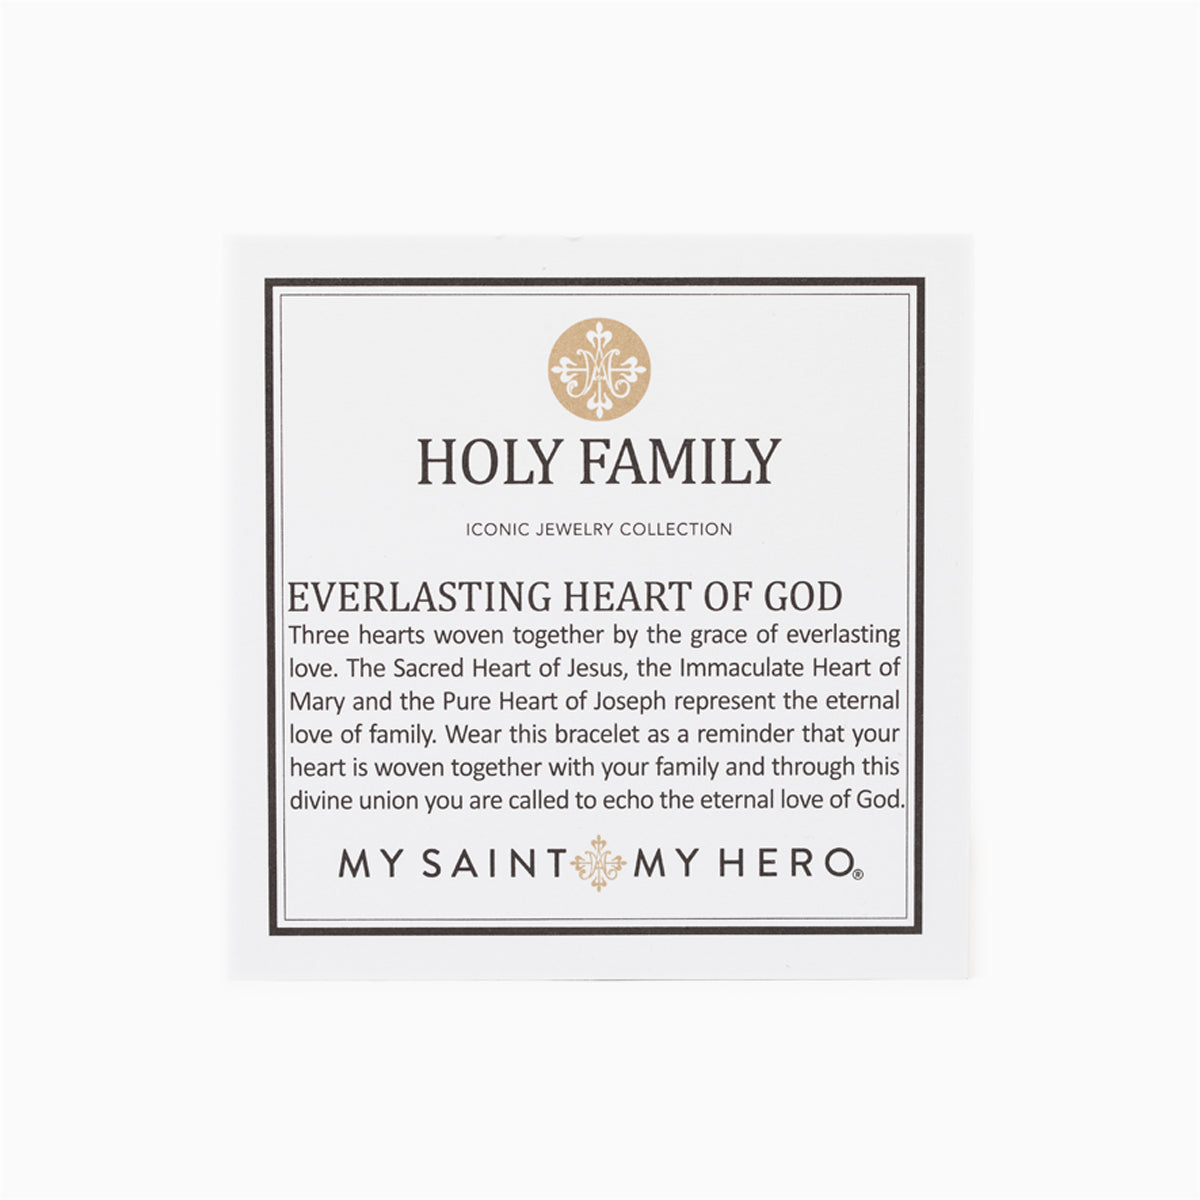 Holy Family Everlasting Heart of God Cuff by My Saint My Hero